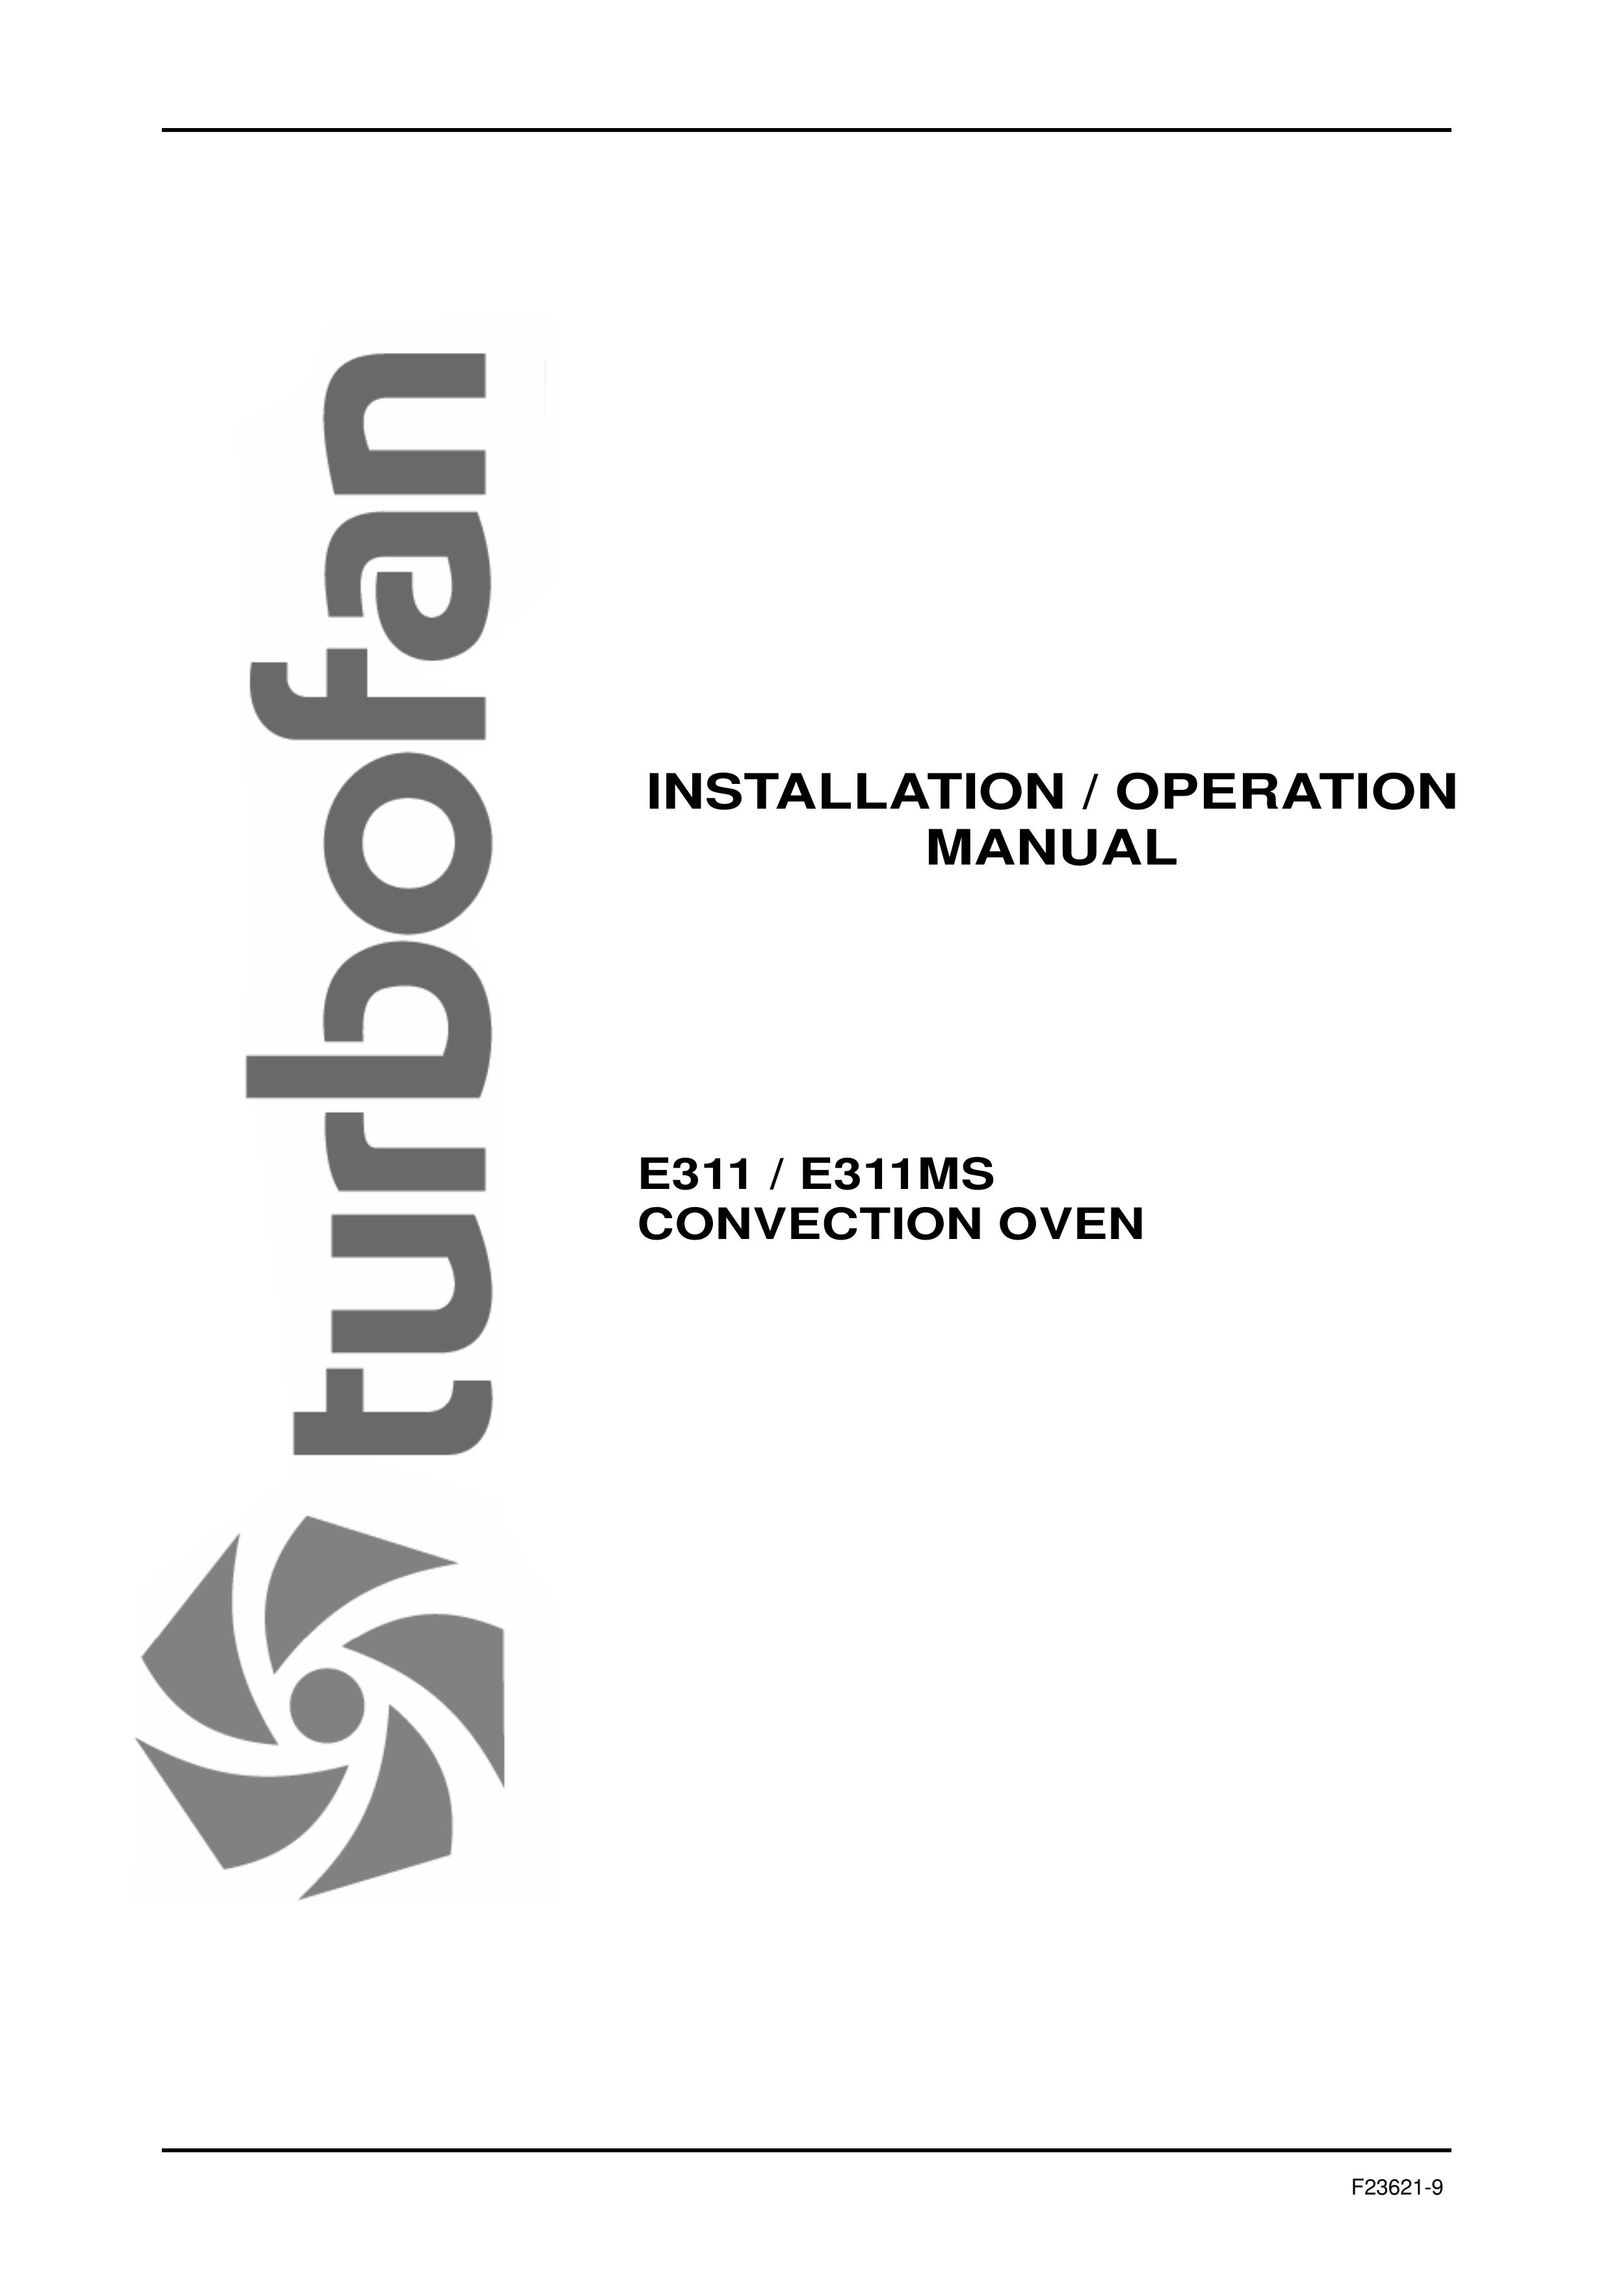 Moffat E311 Convection Oven User Manual